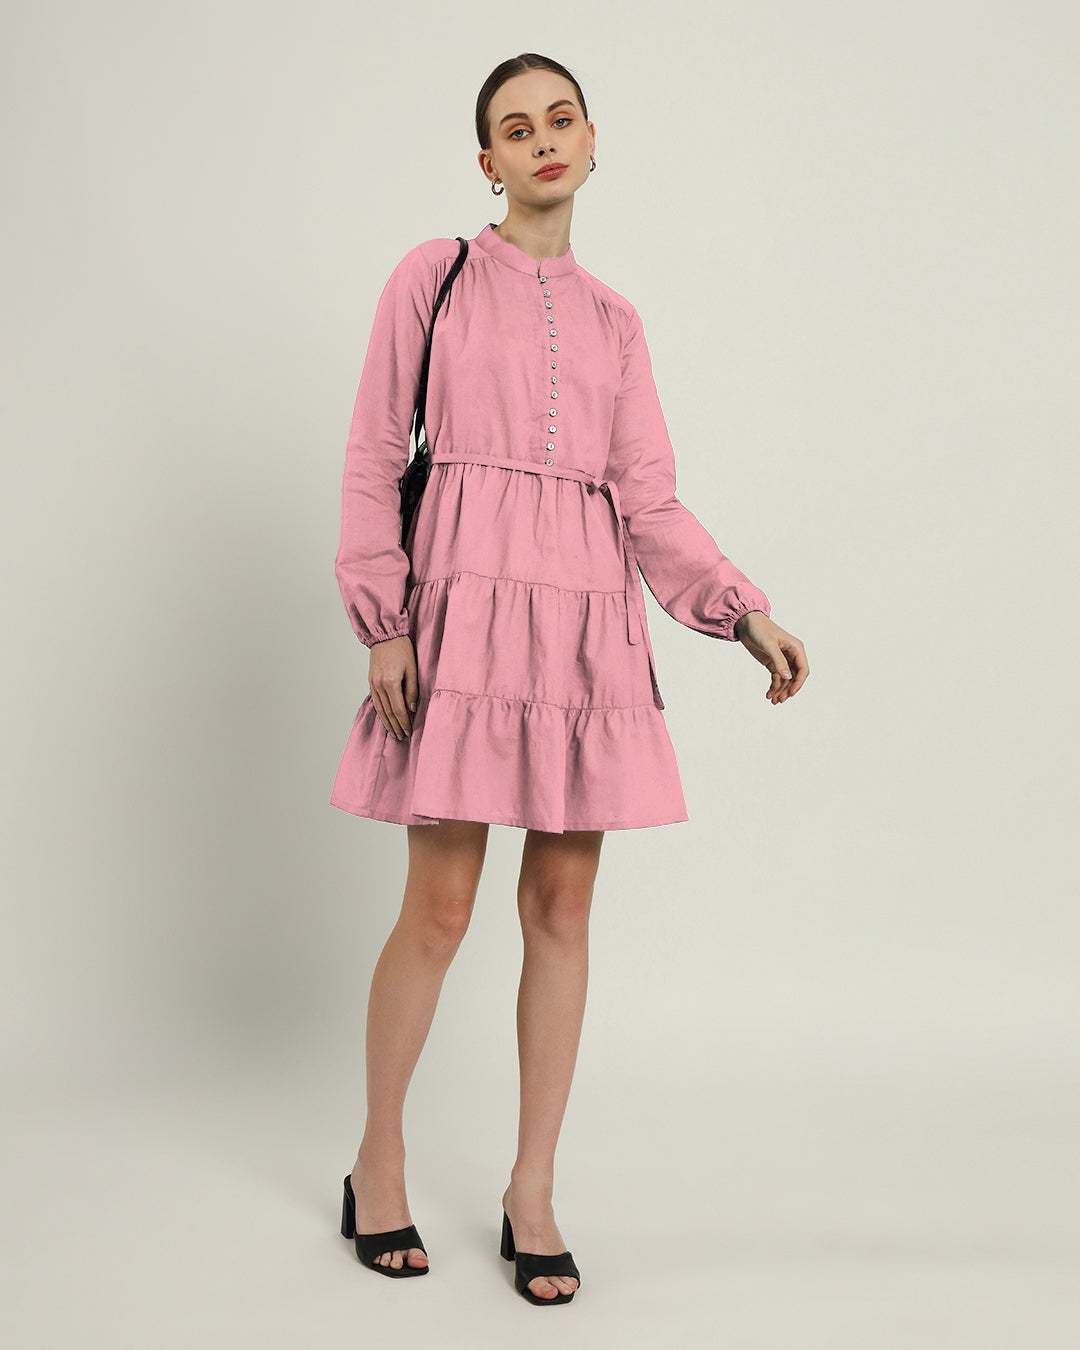 The Ely Fondant Pink Cotton Dress